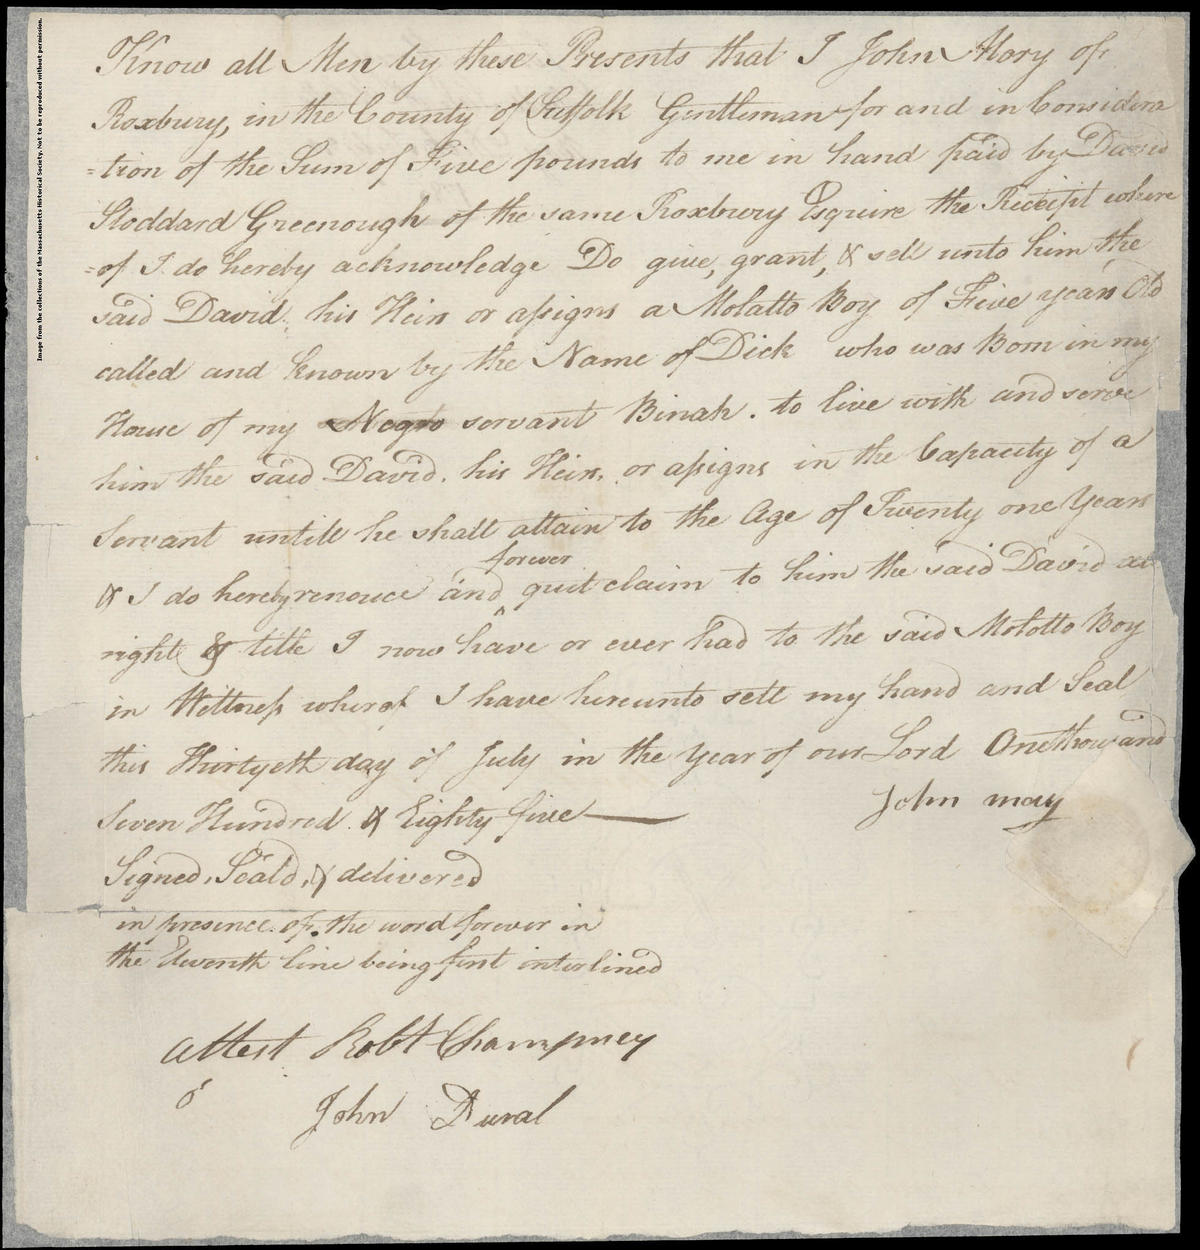 A 1785 handwritten indenture agreement for Dick.